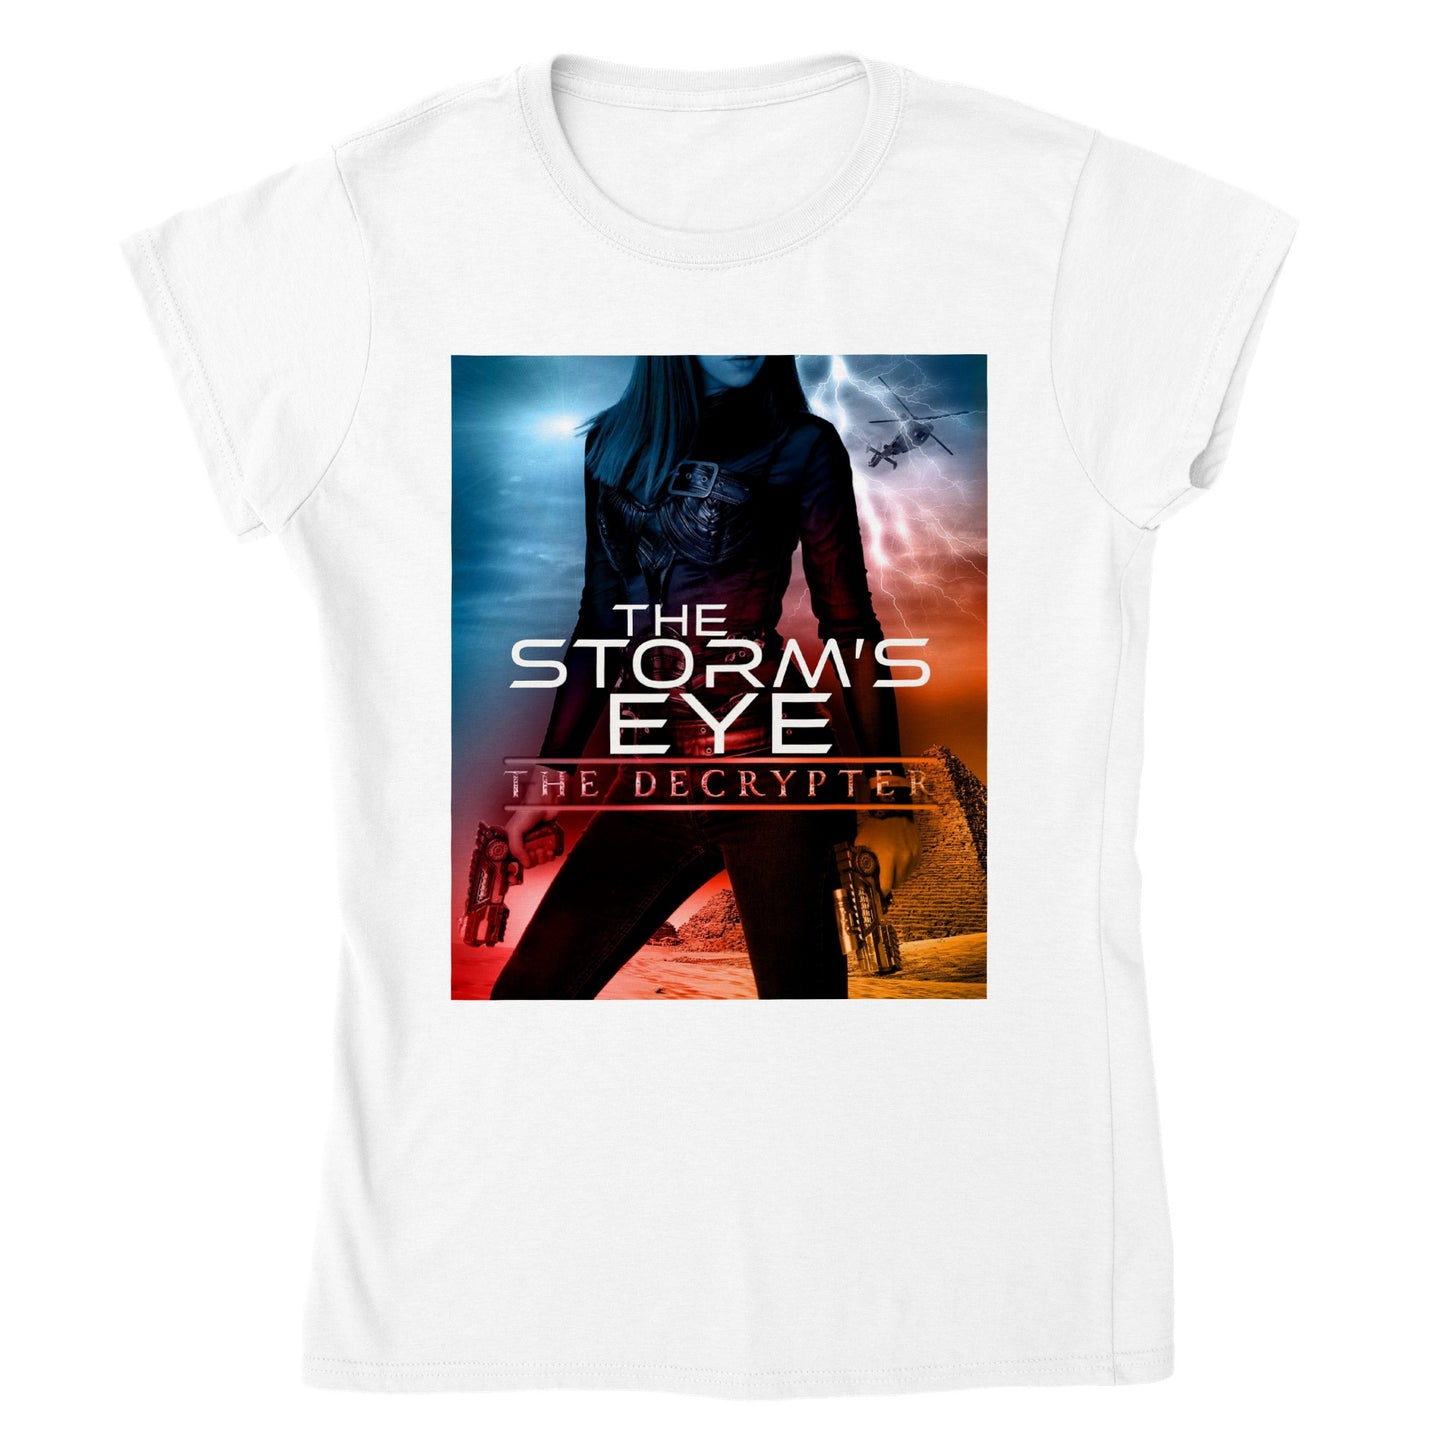 The Storm's Eye Classic Women's Crewneck T-shirt